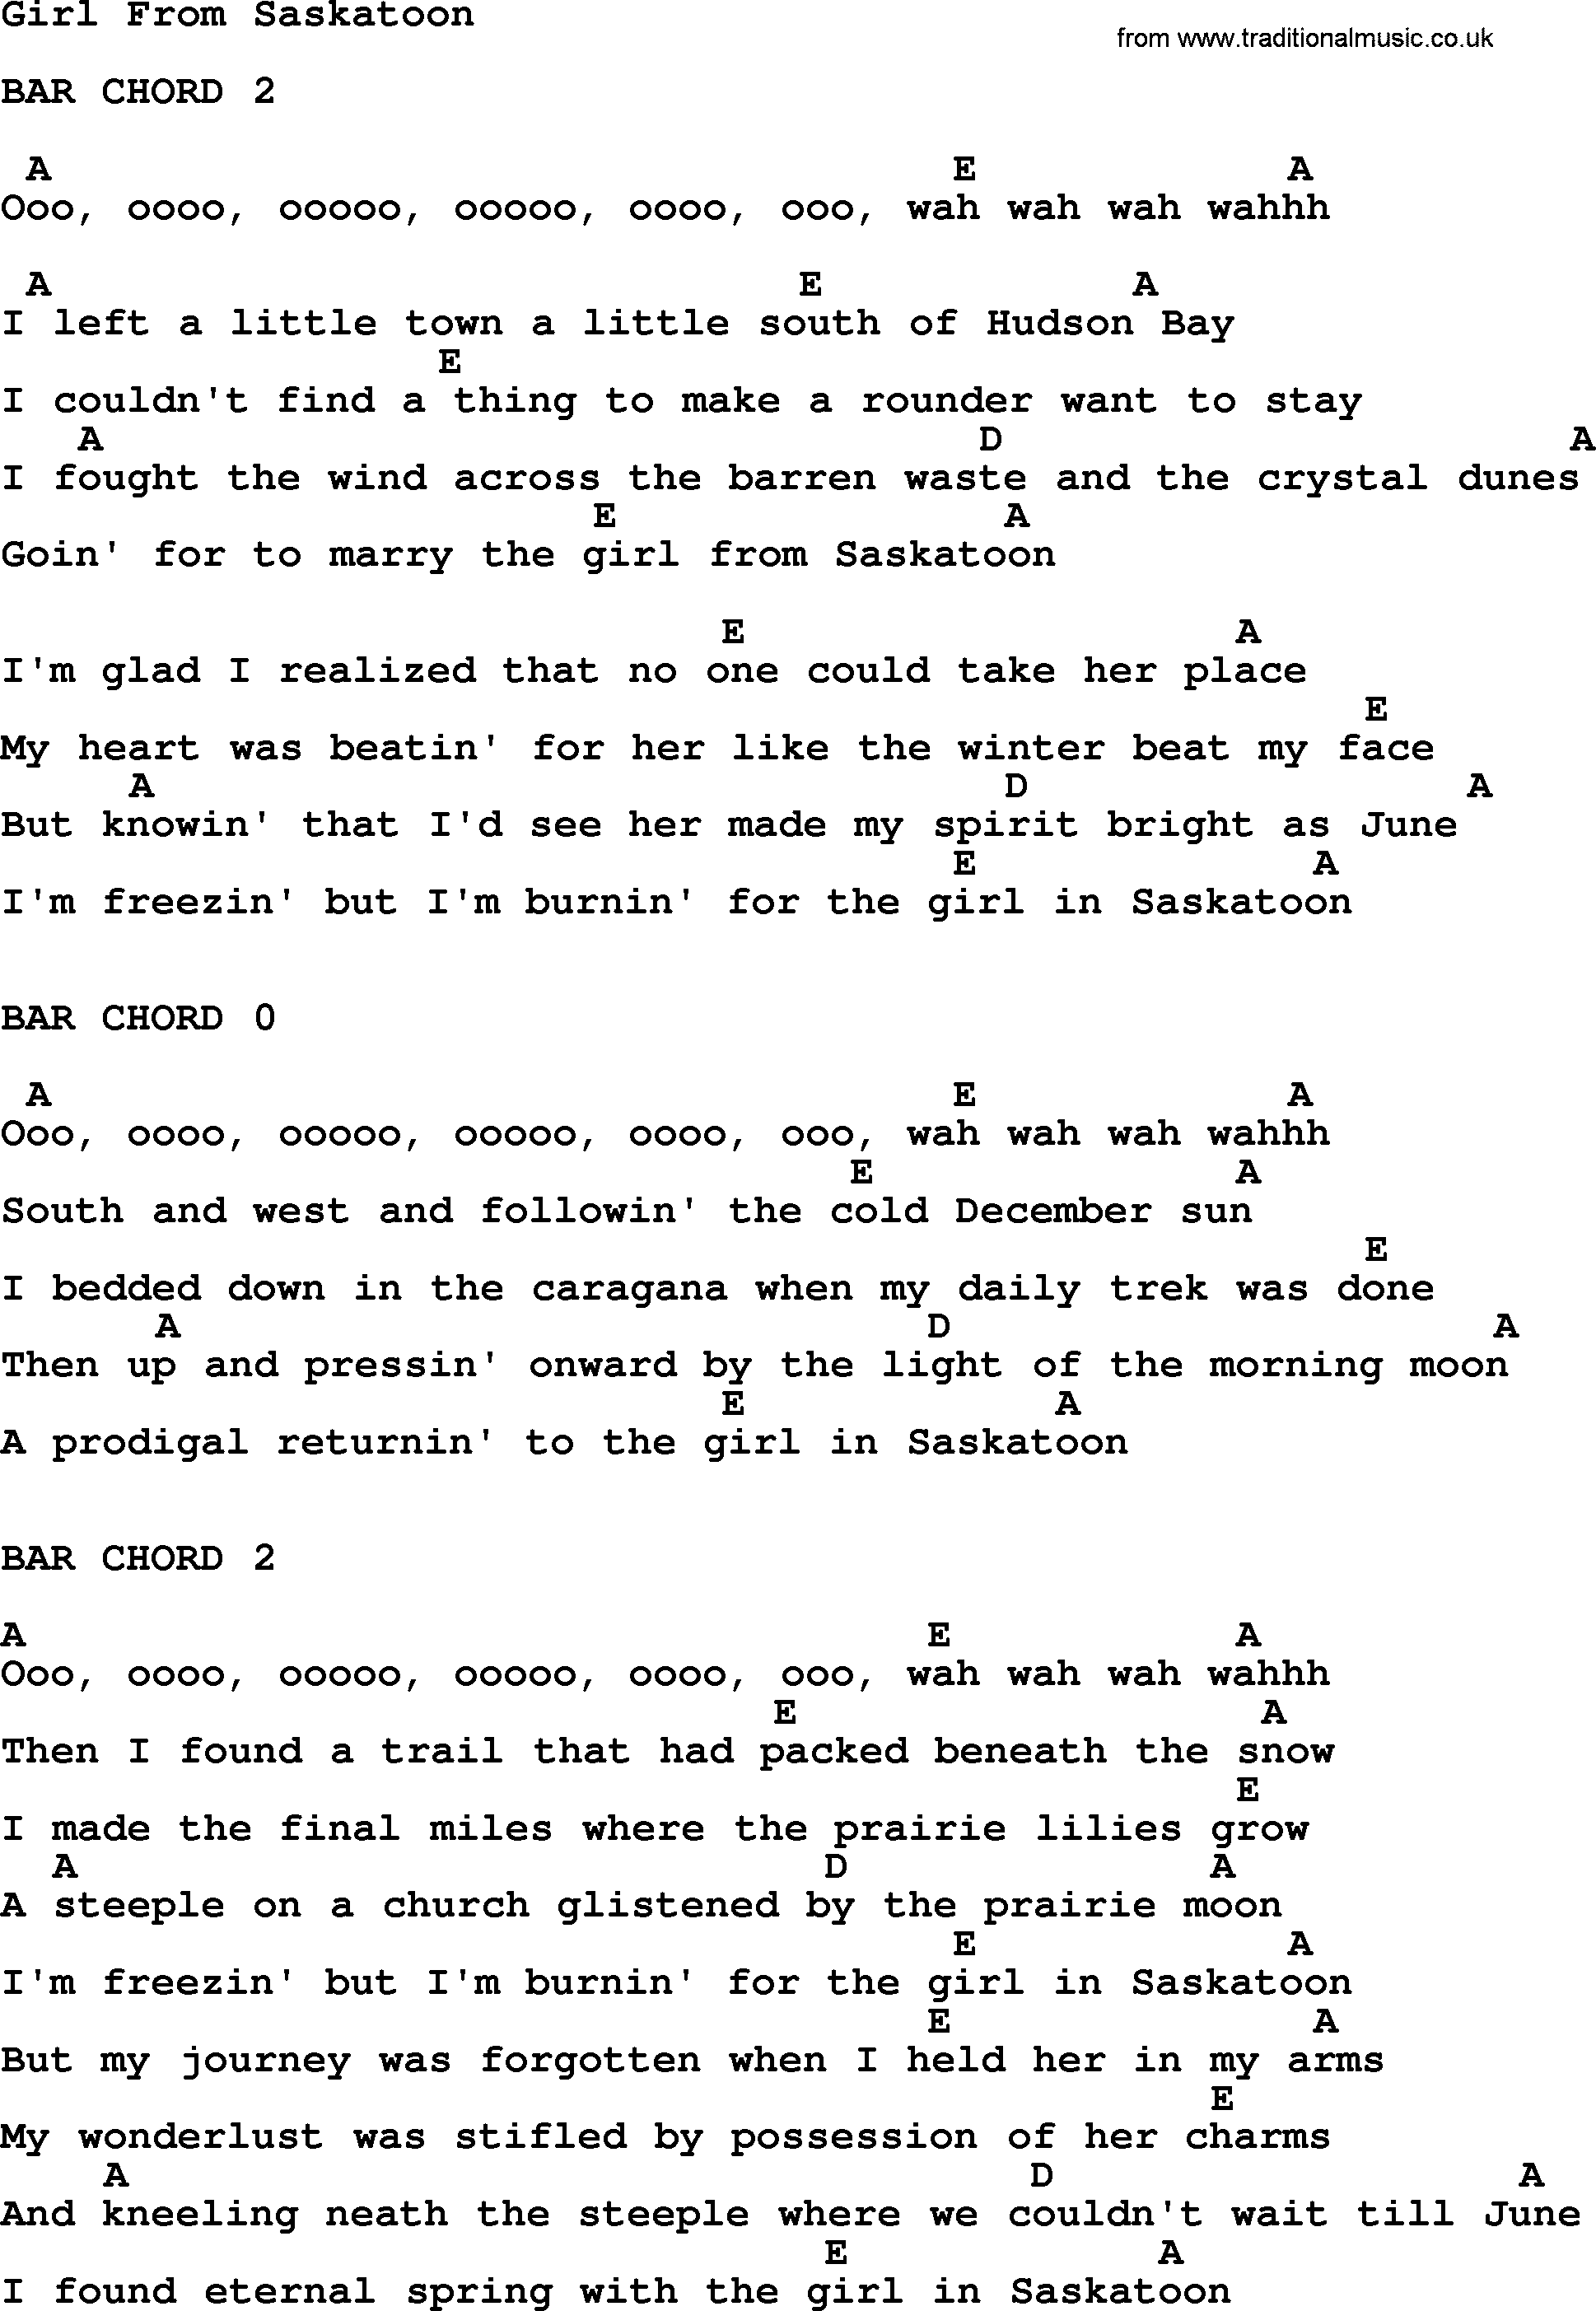 Johnny Cash song Girl From Saskatoon, lyrics and chords